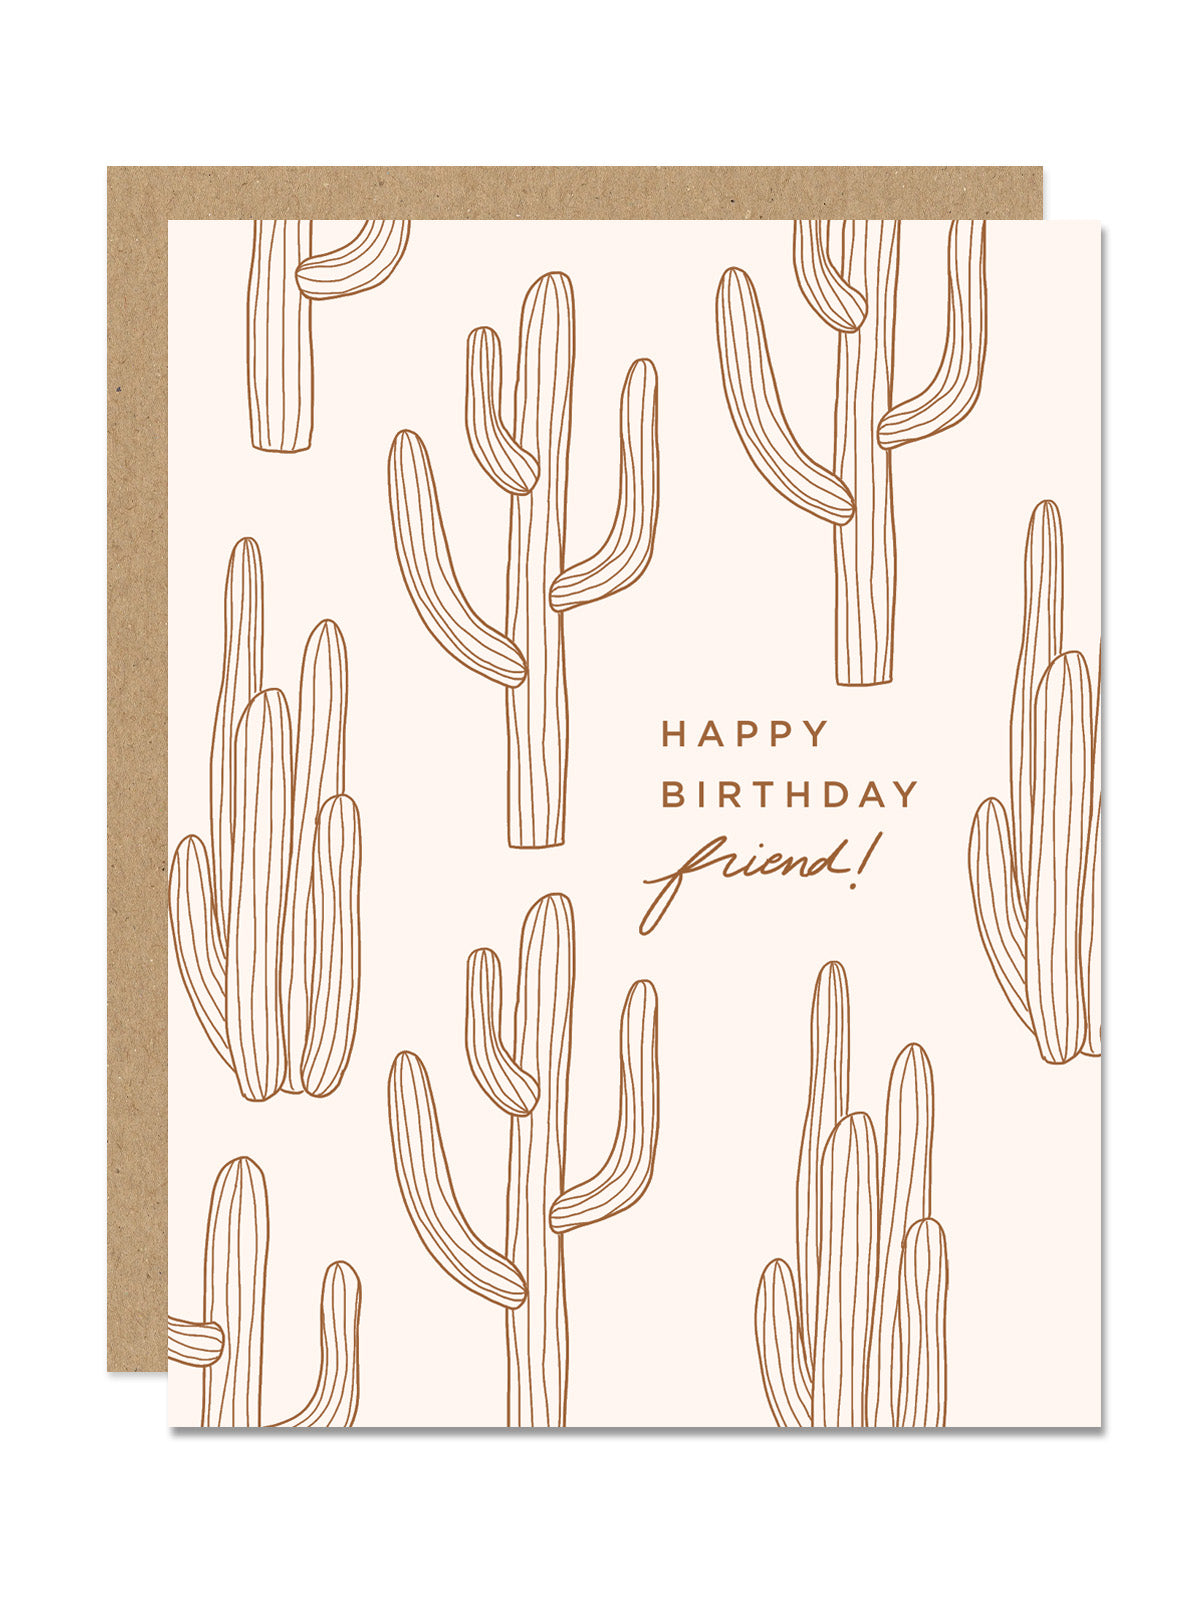 Cactus Happy Birthday Friend Card